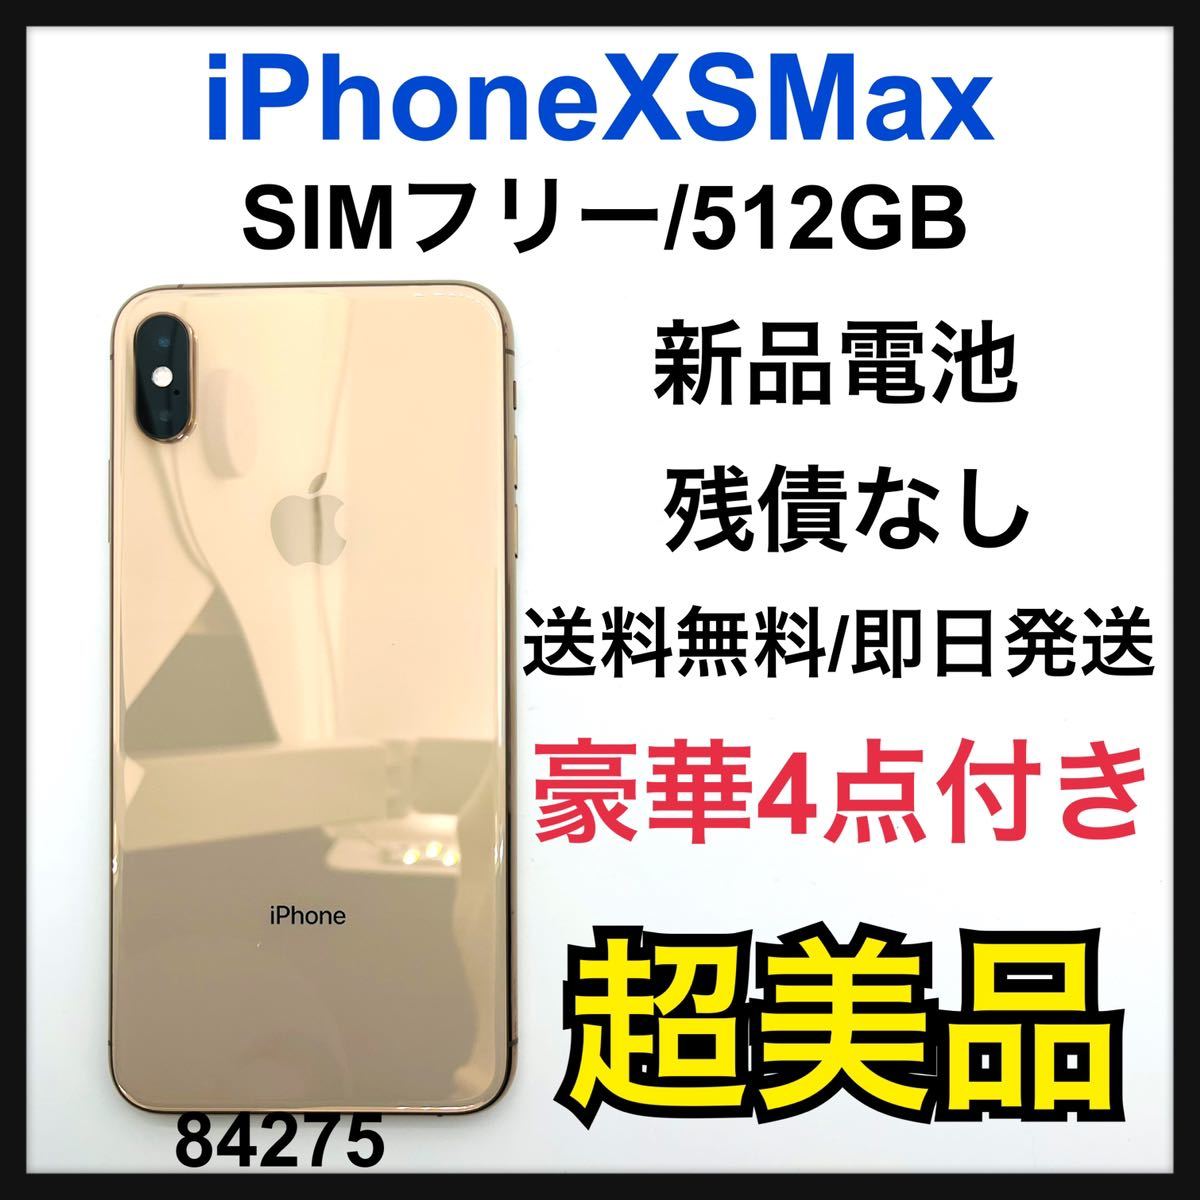 S 新品電池 iPhone Xs Max Gold 512 GB SIMフリー | normanhubbard.com